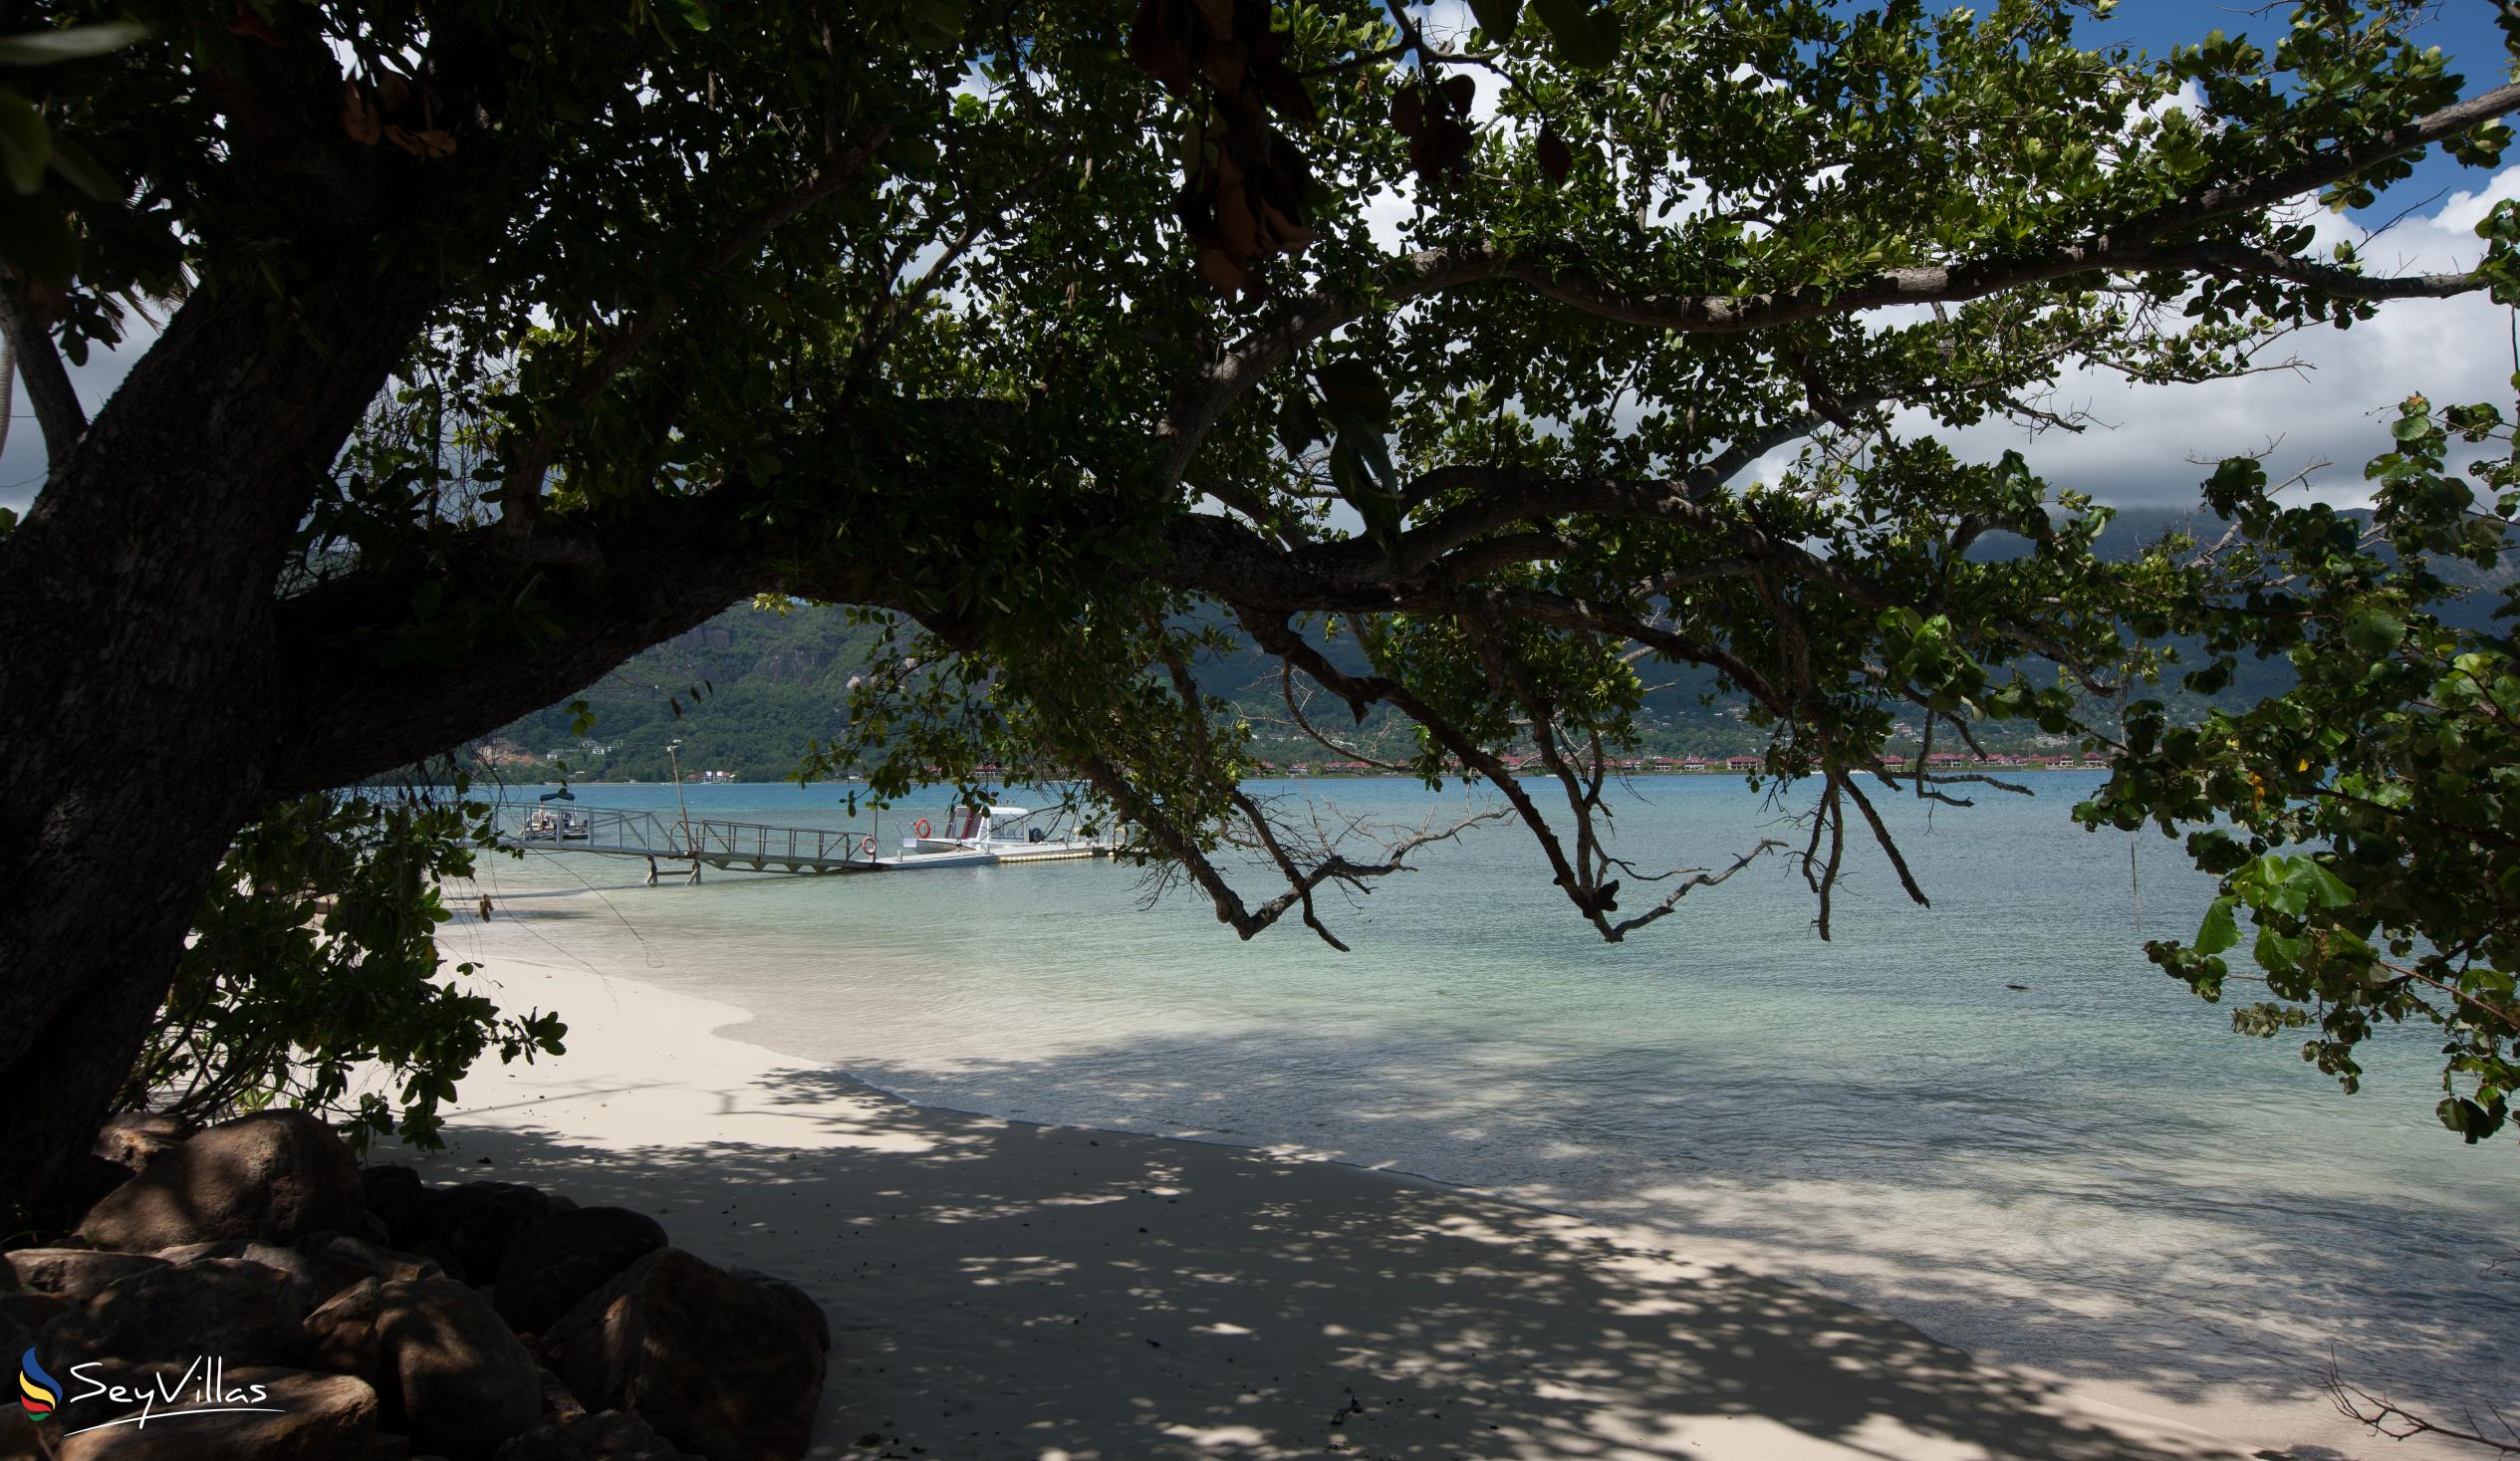 Foto 37: Surf Tropical Villa (Takamaka Beach Villas) - Posizione - Cerf Island (Seychelles)